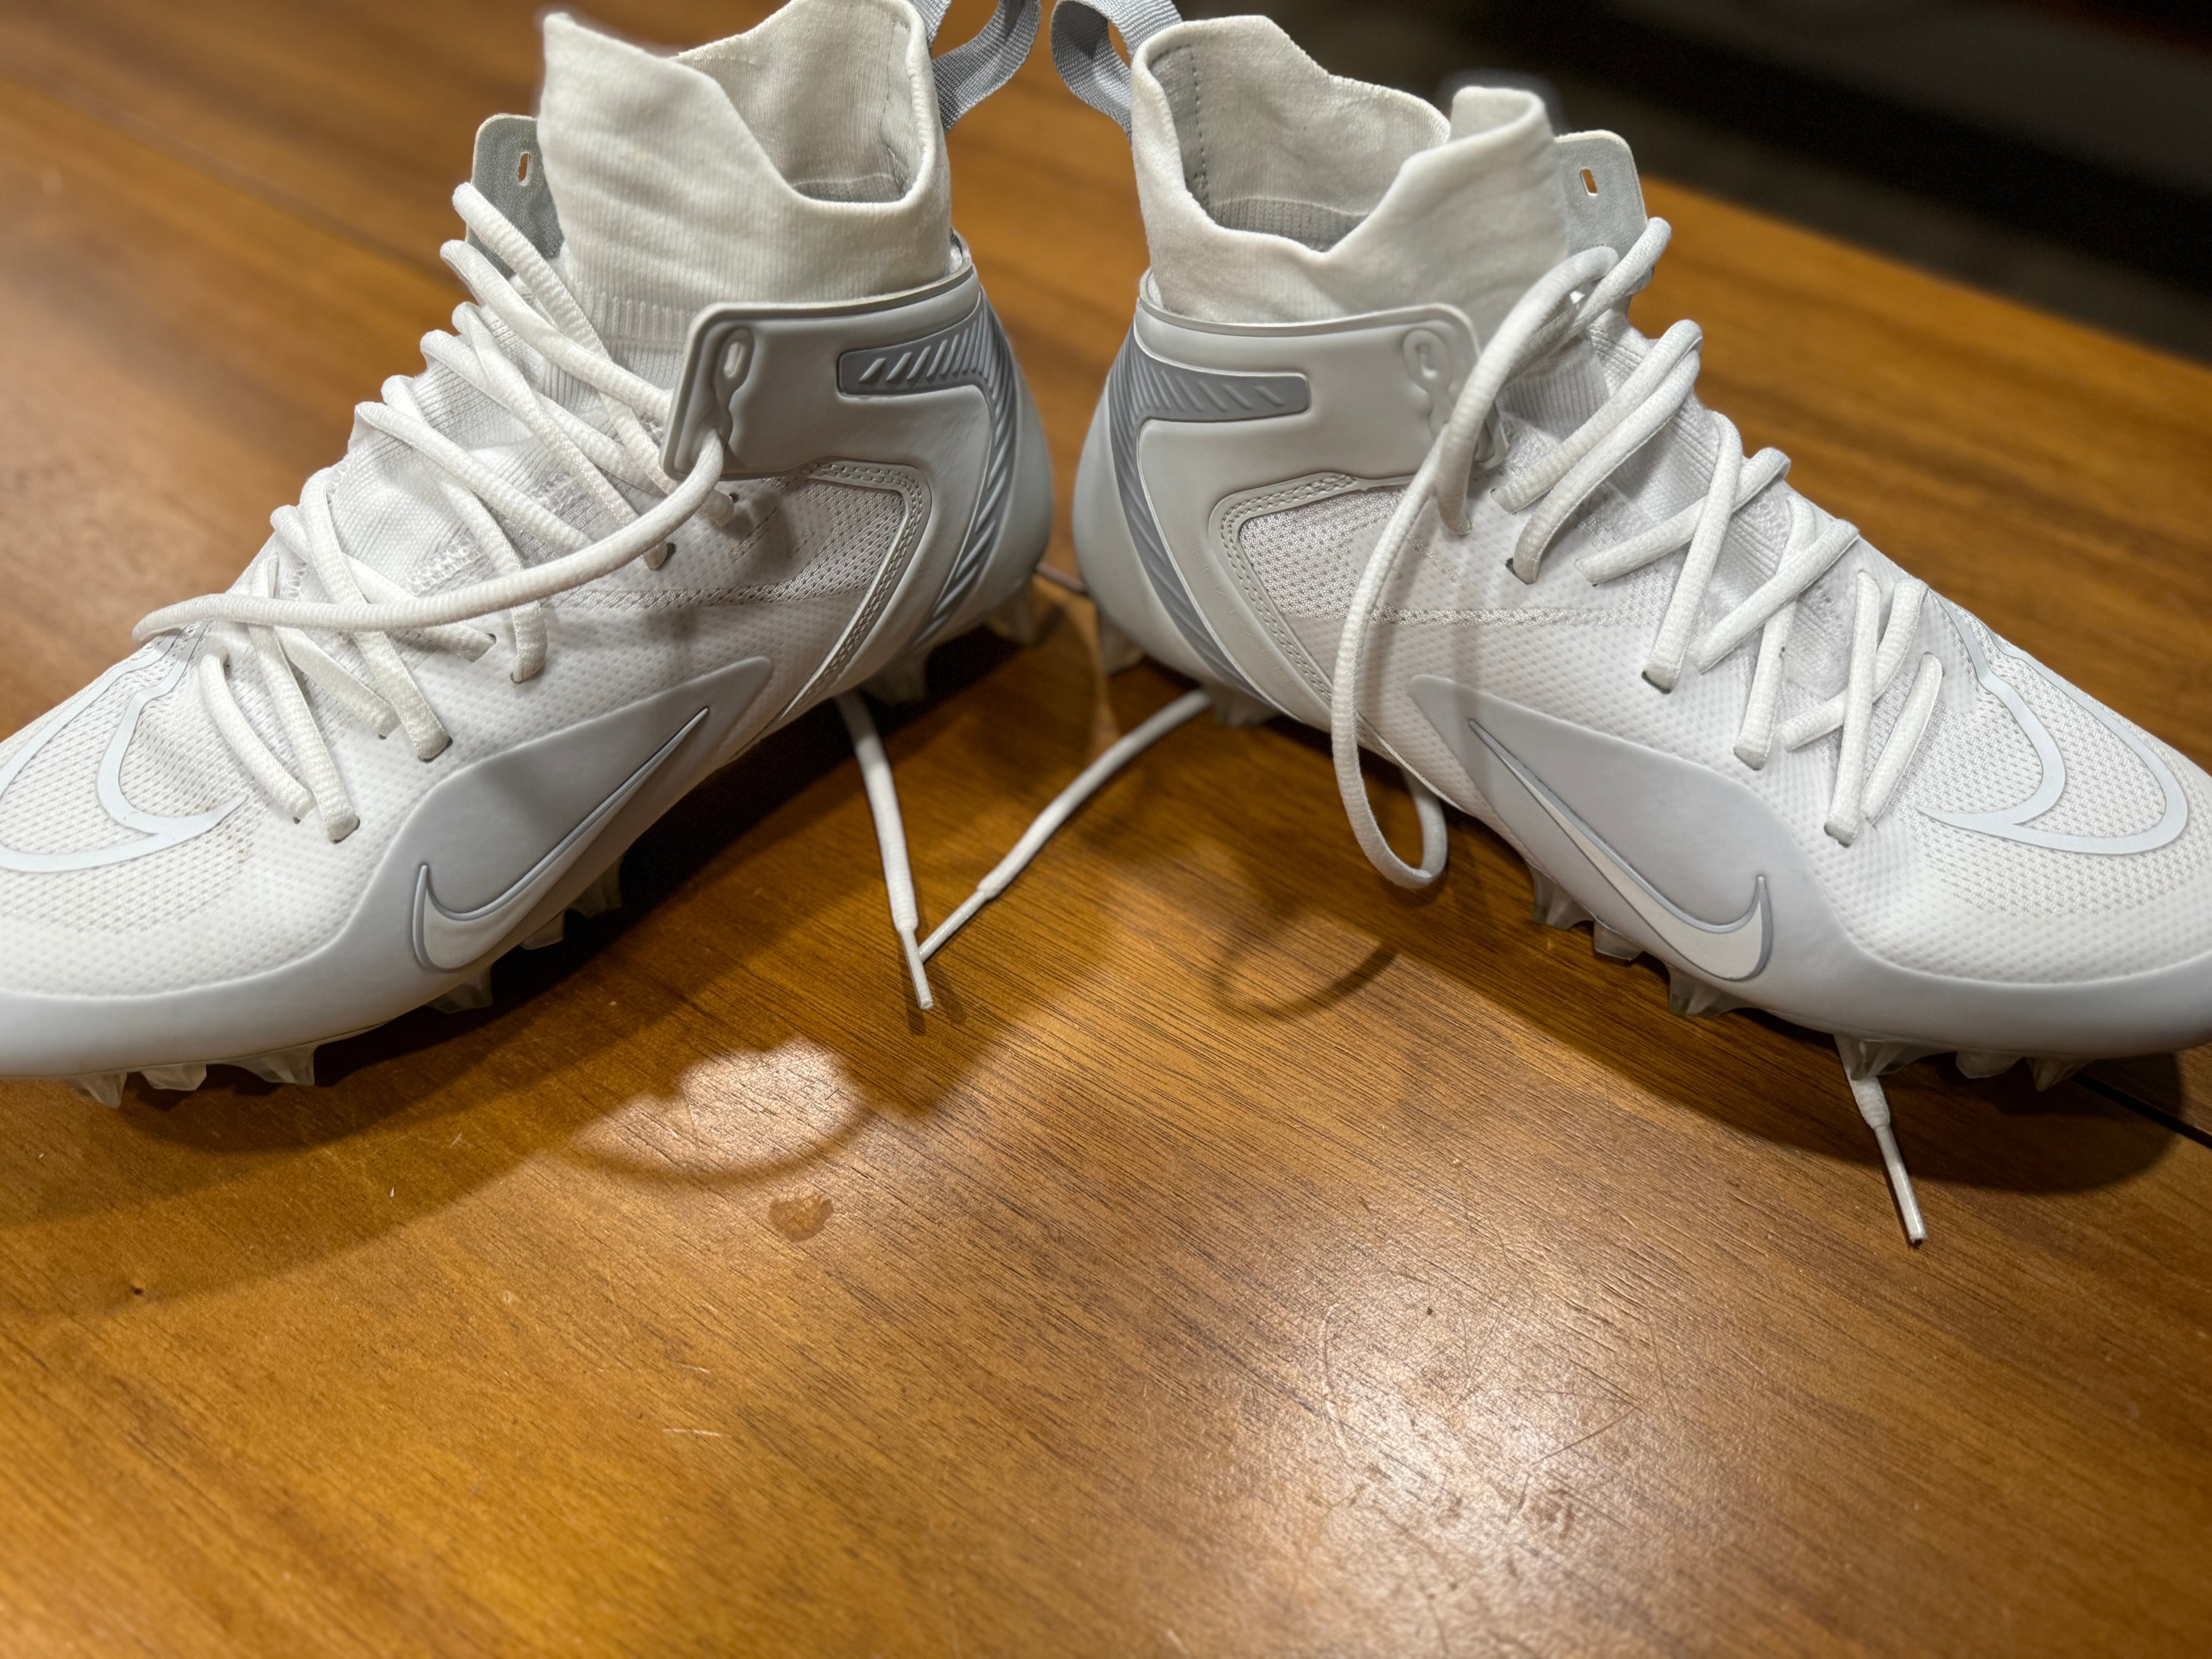 White New Unisex Size 9.0 (Women's 10) Molded Cleats Nike High Top Alpha Huarache 8 Elite